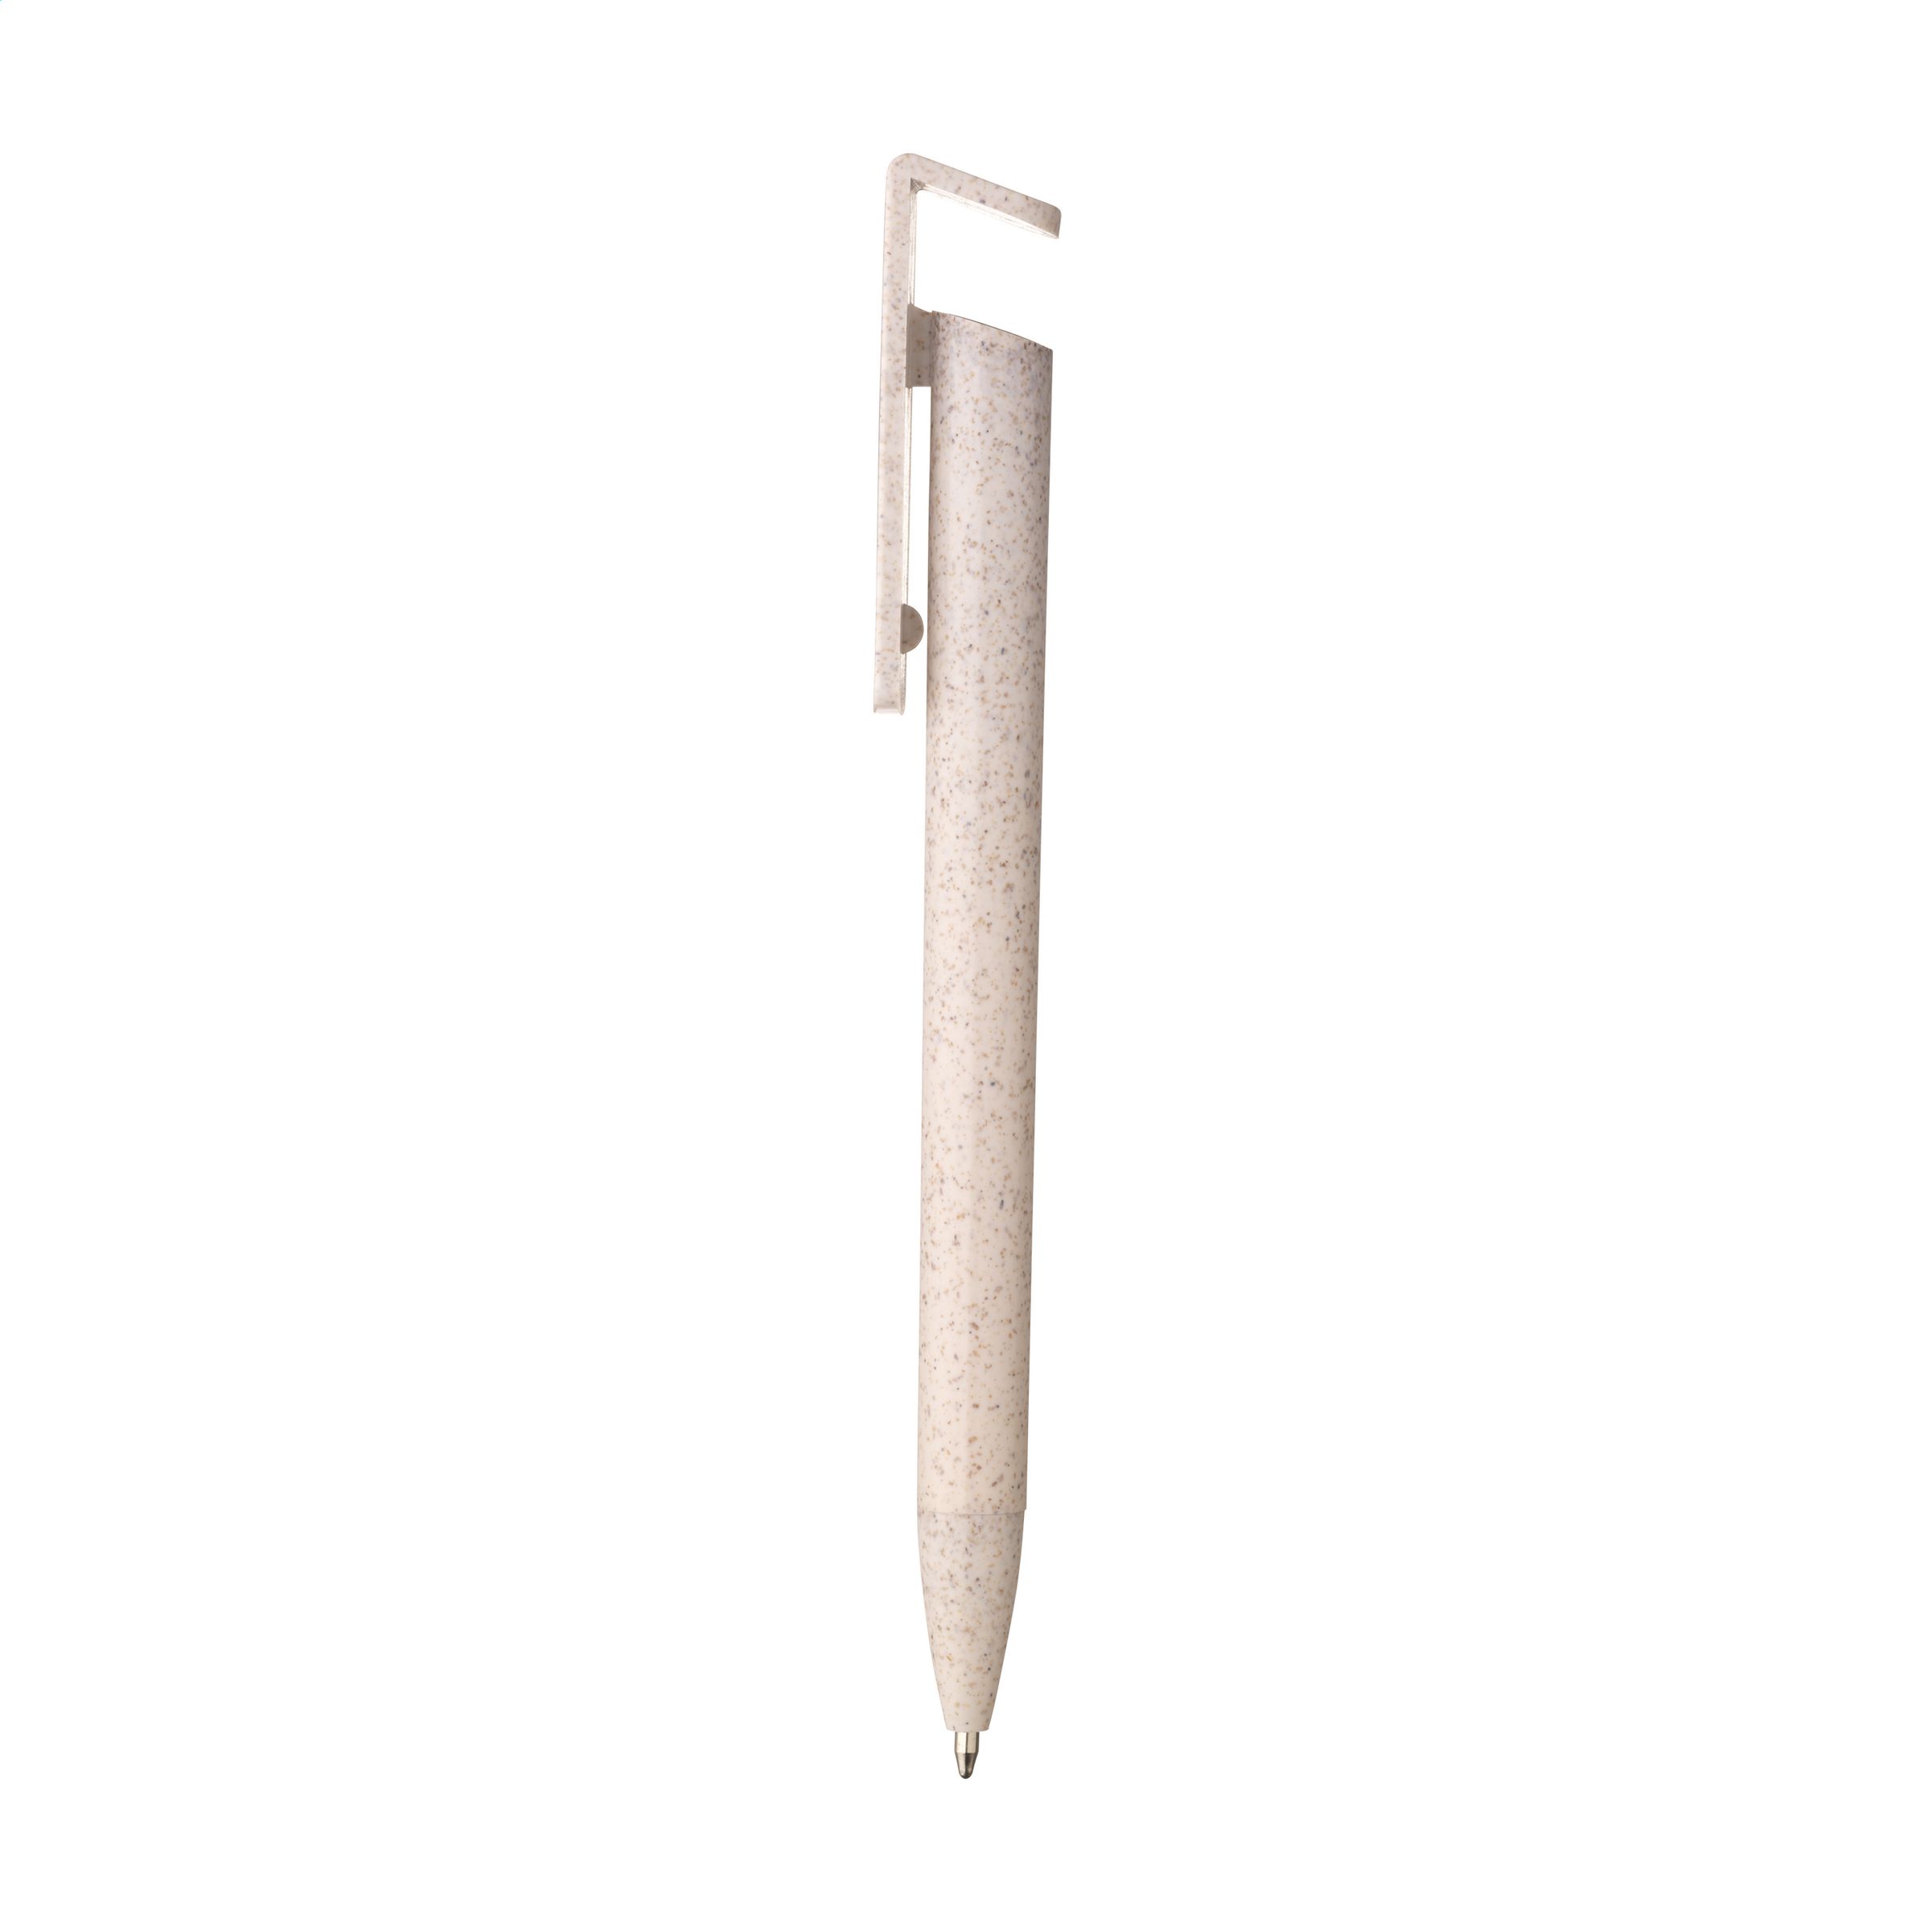 Handy Pen Wheatstraw stylo en paille de blé - Zaprinta France